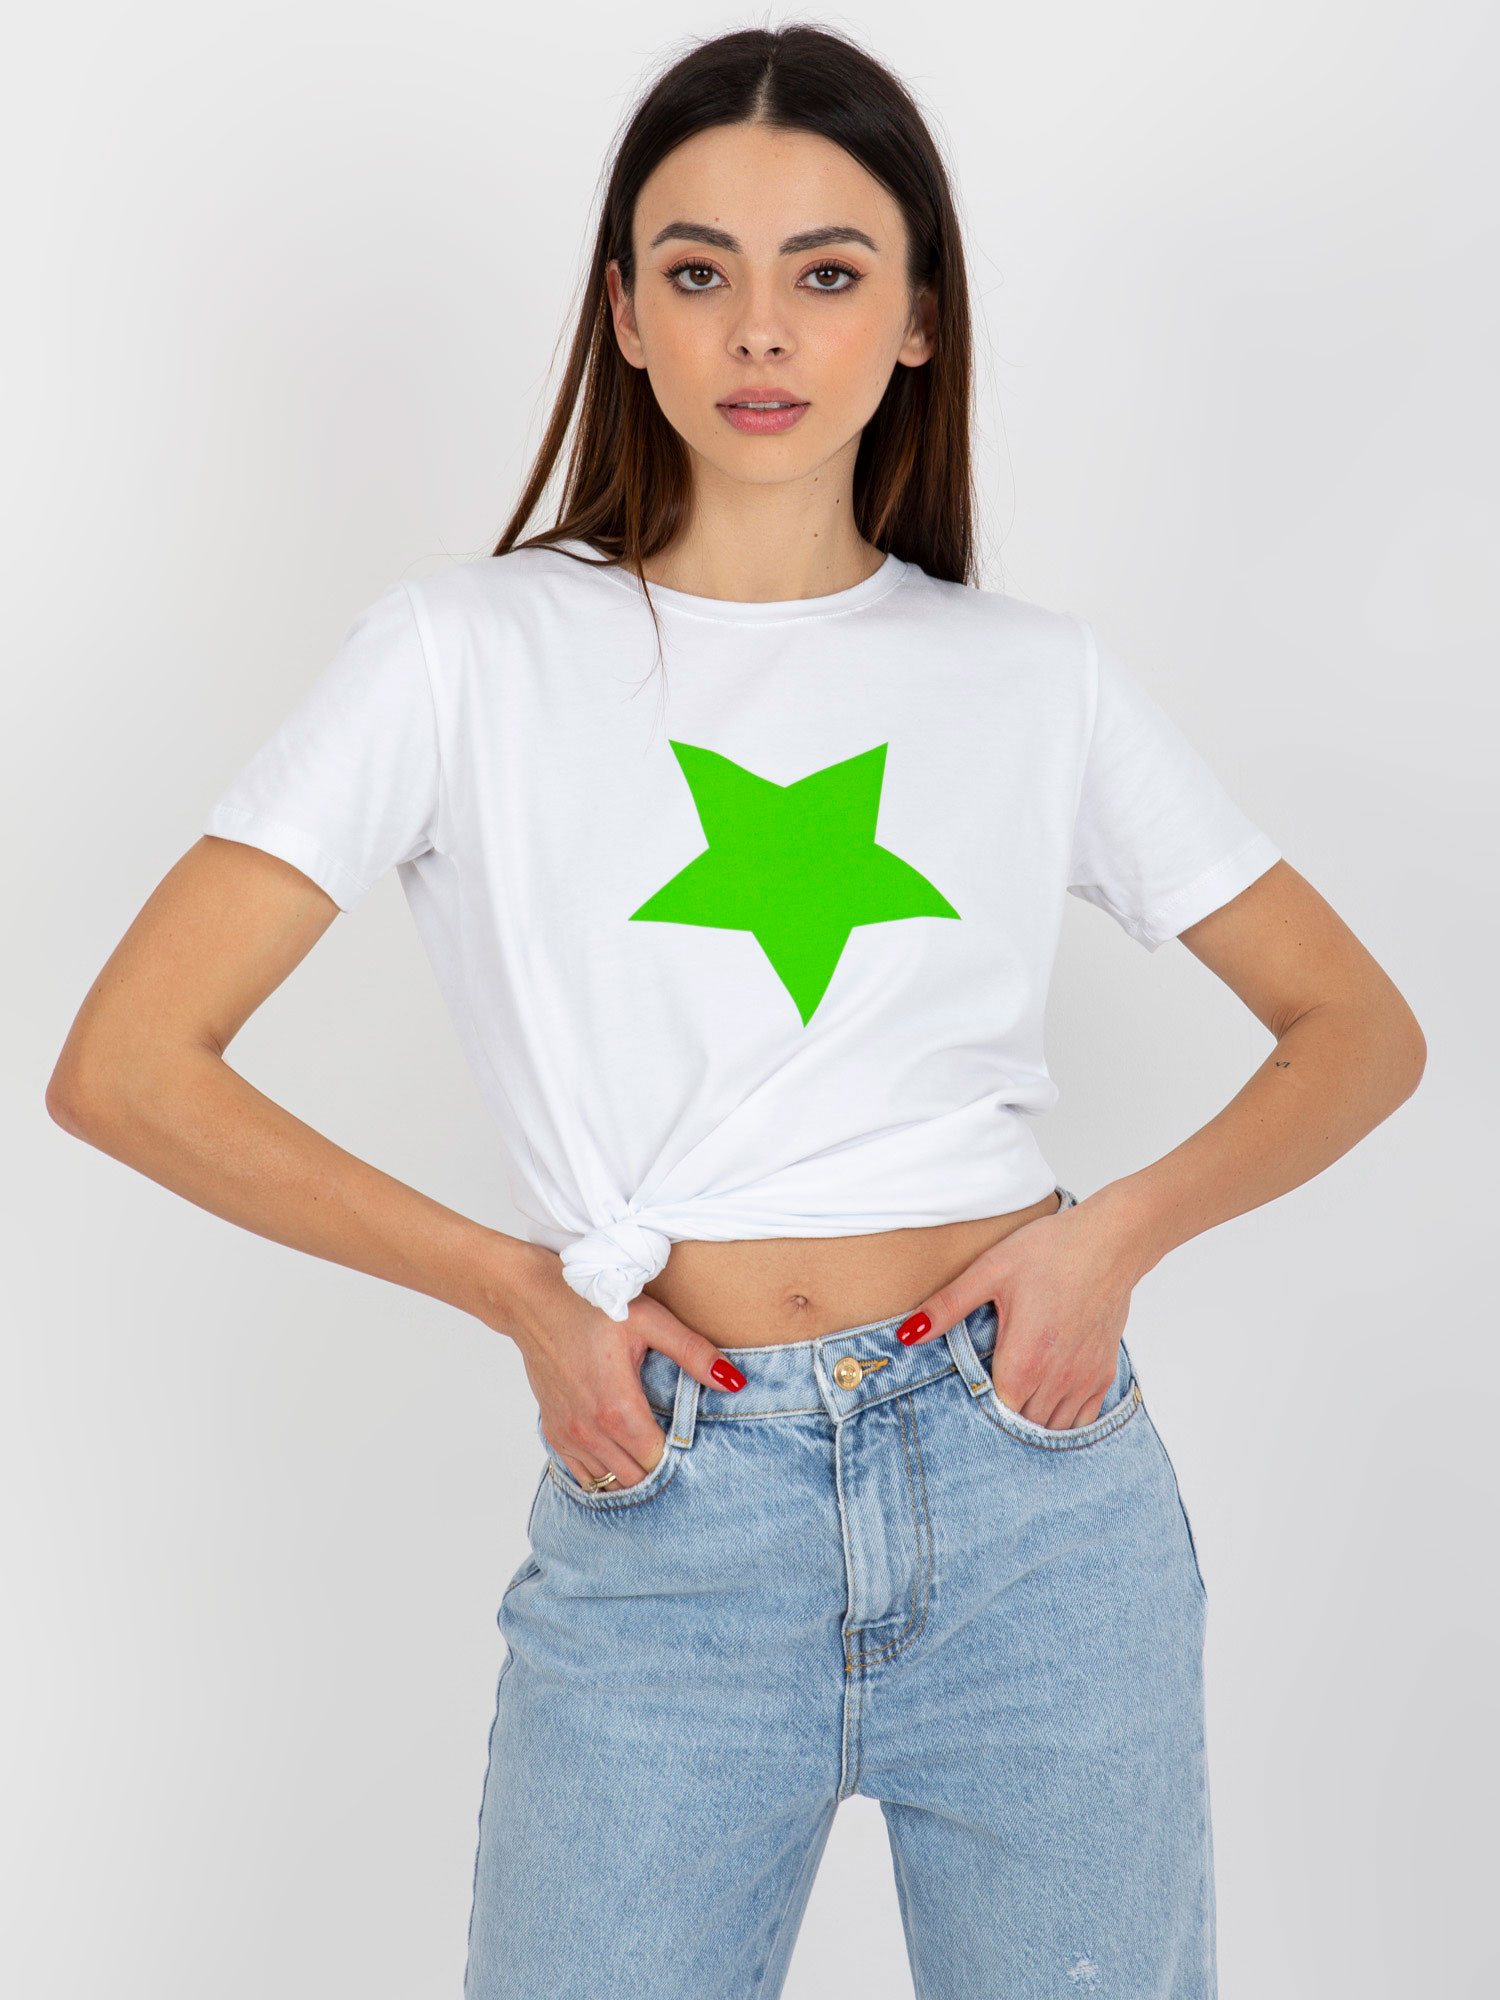 Dámské tričko RV TS 8626.00 bílá zelená - FPrice S/M